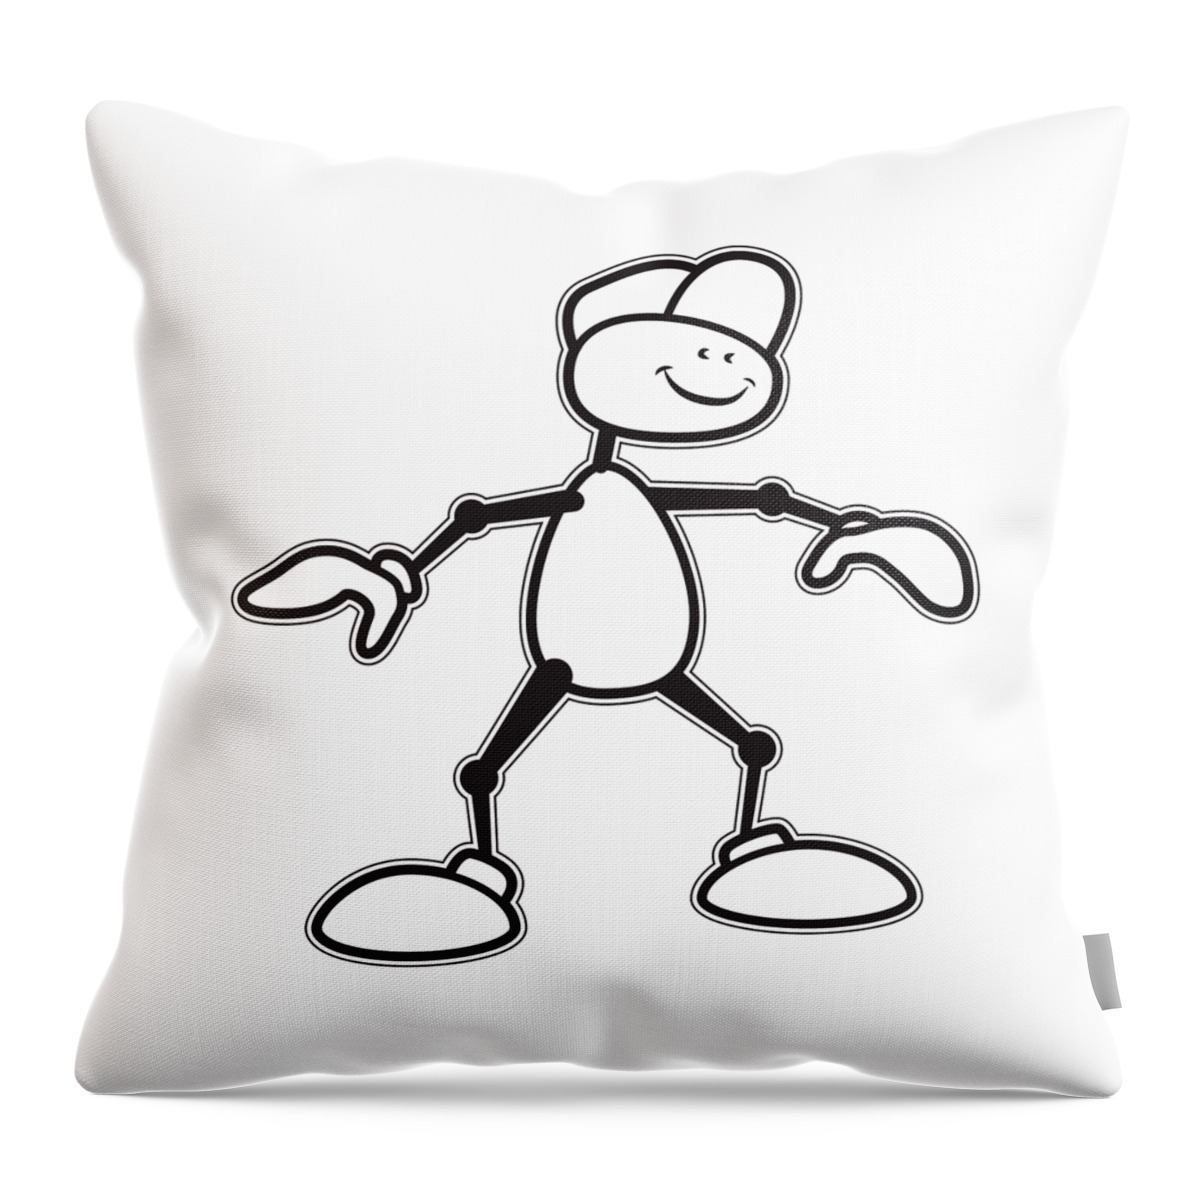  Throw Pillow featuring the digital art Stick Figure by Gene Bollig